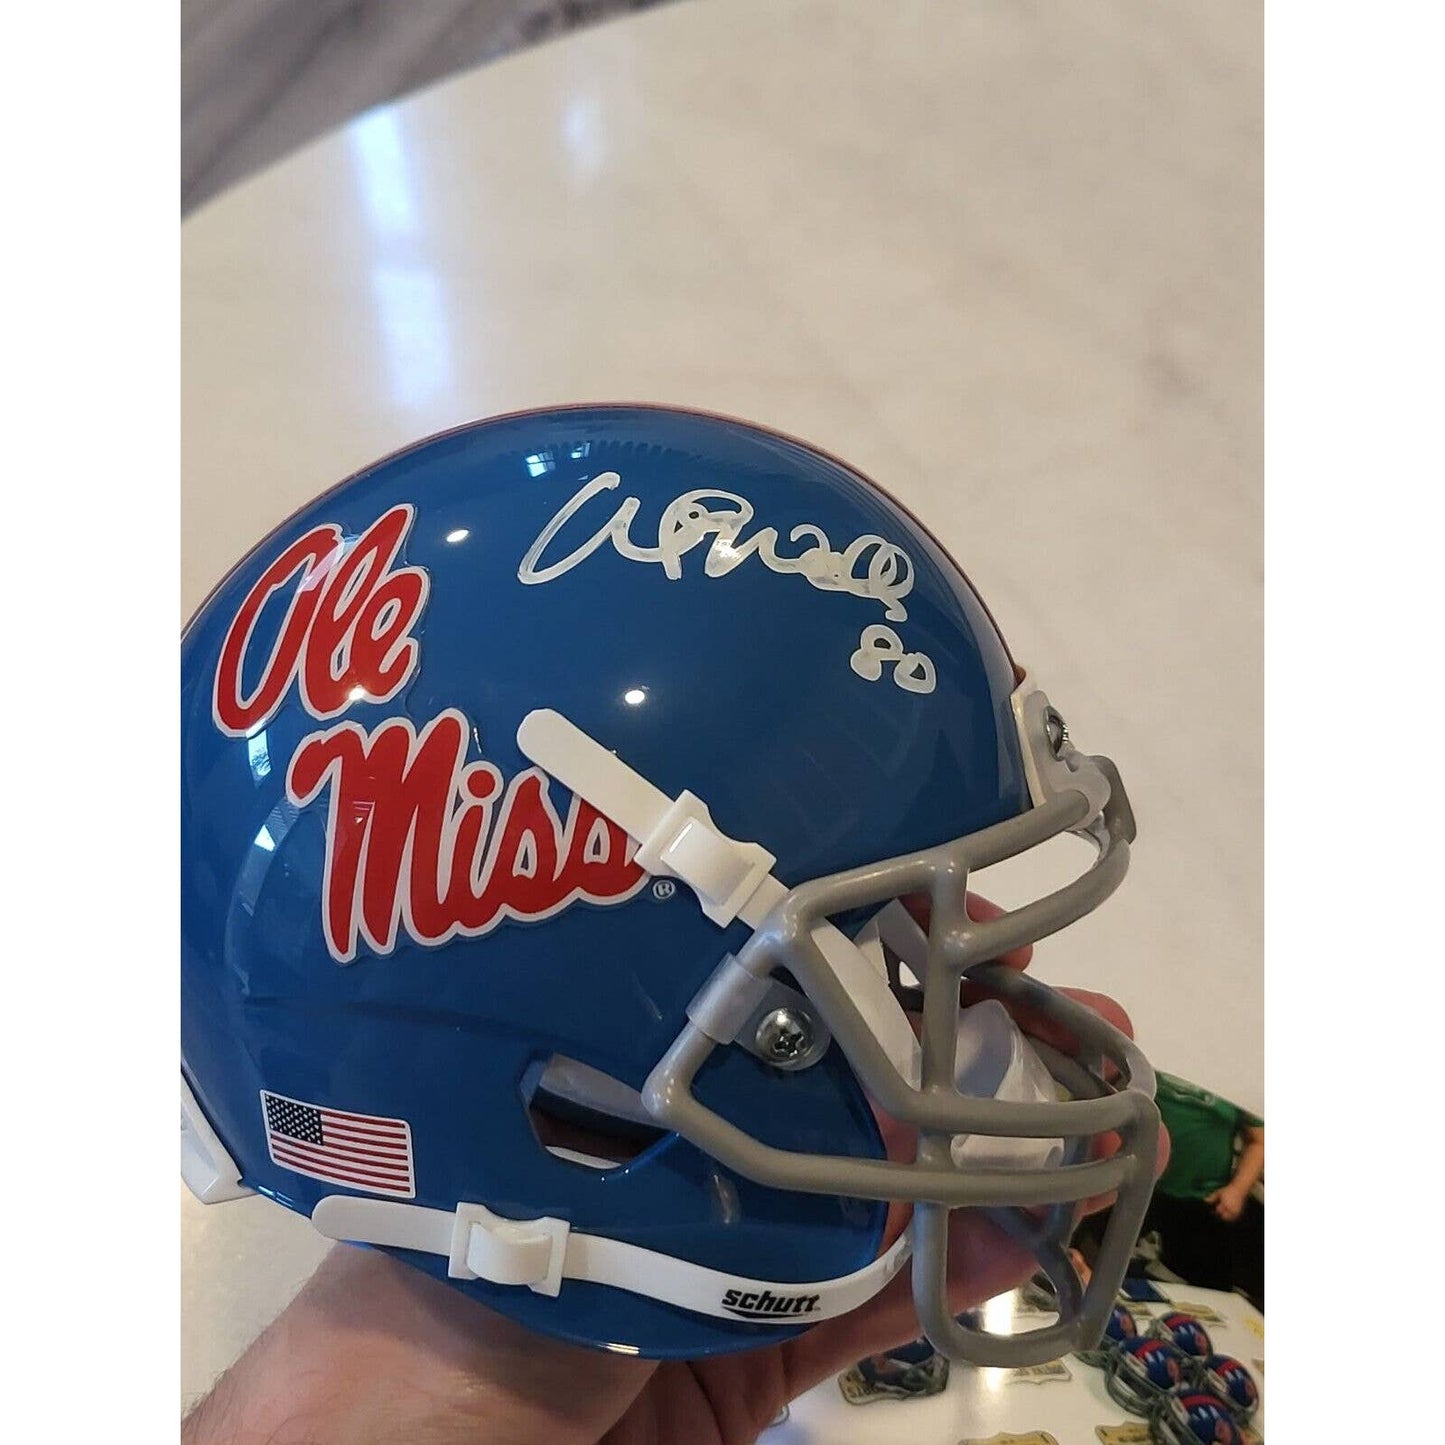 Wesley Walls Autographed/Signed Mini Helmet COA Ole Miss Rebels - TreasuresEvolved